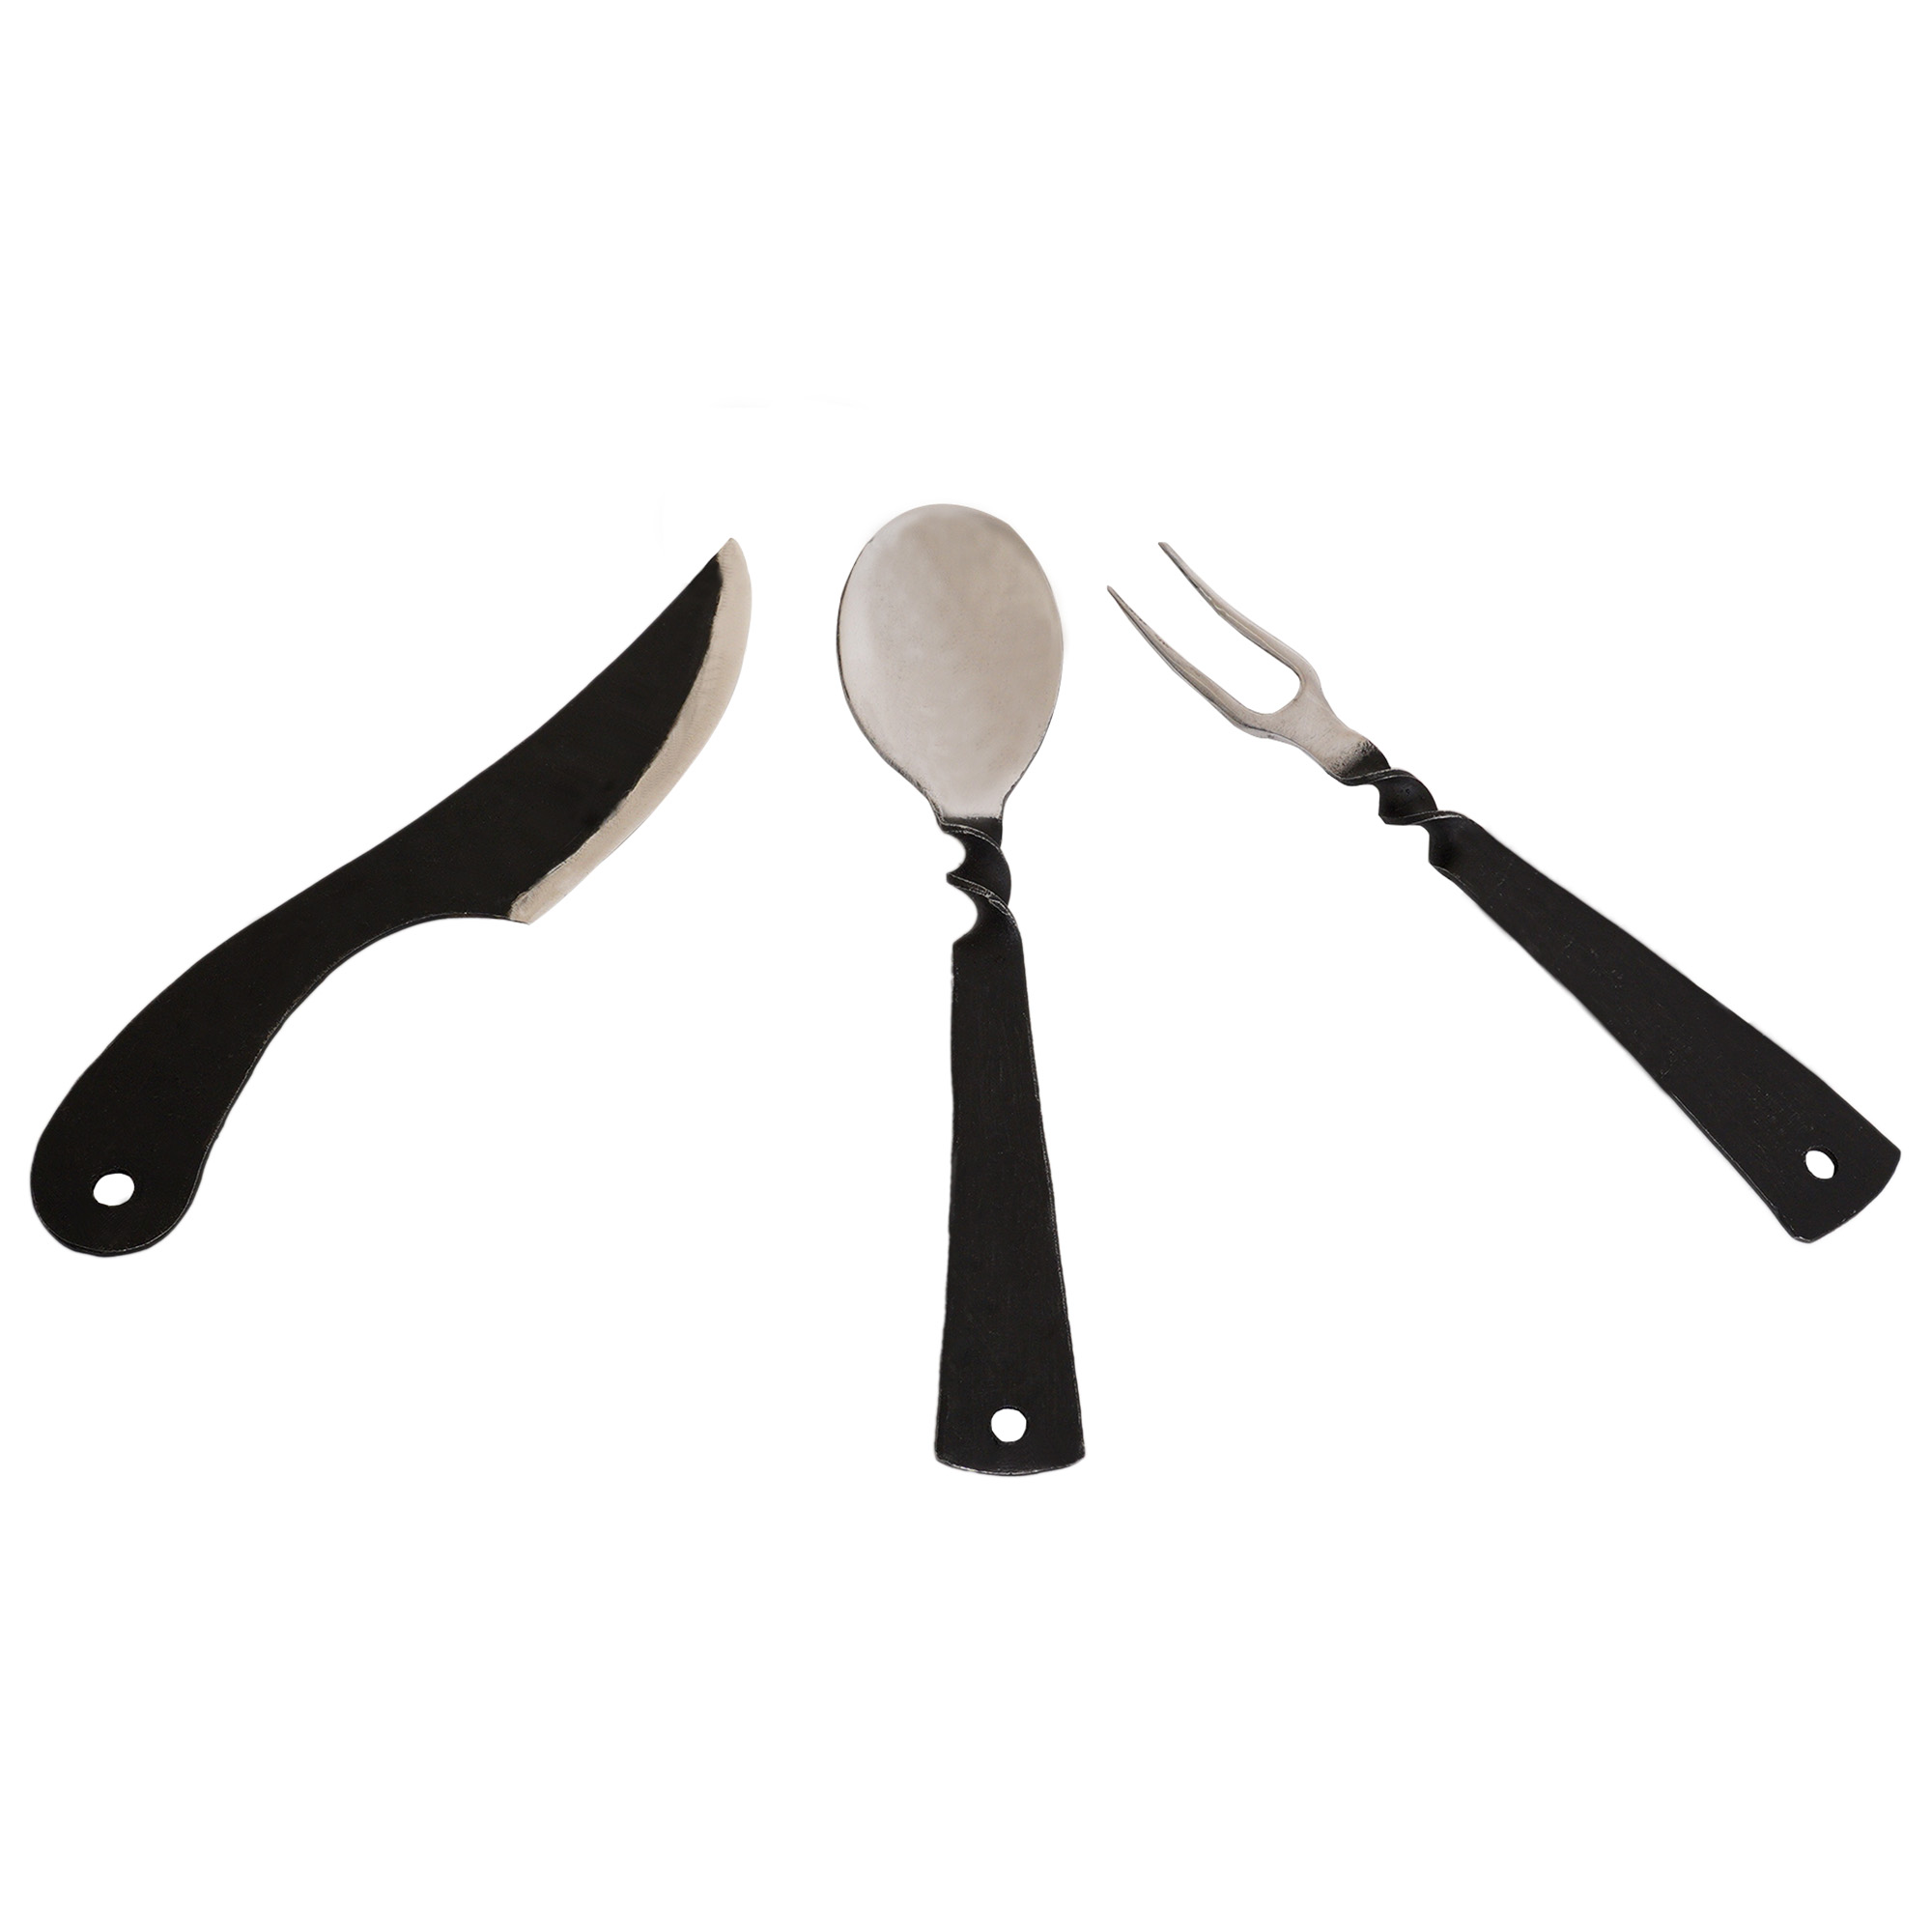 Fingerhut - Calphalon Katana Series 14-Pc. Stainless Steel Cutlery Set